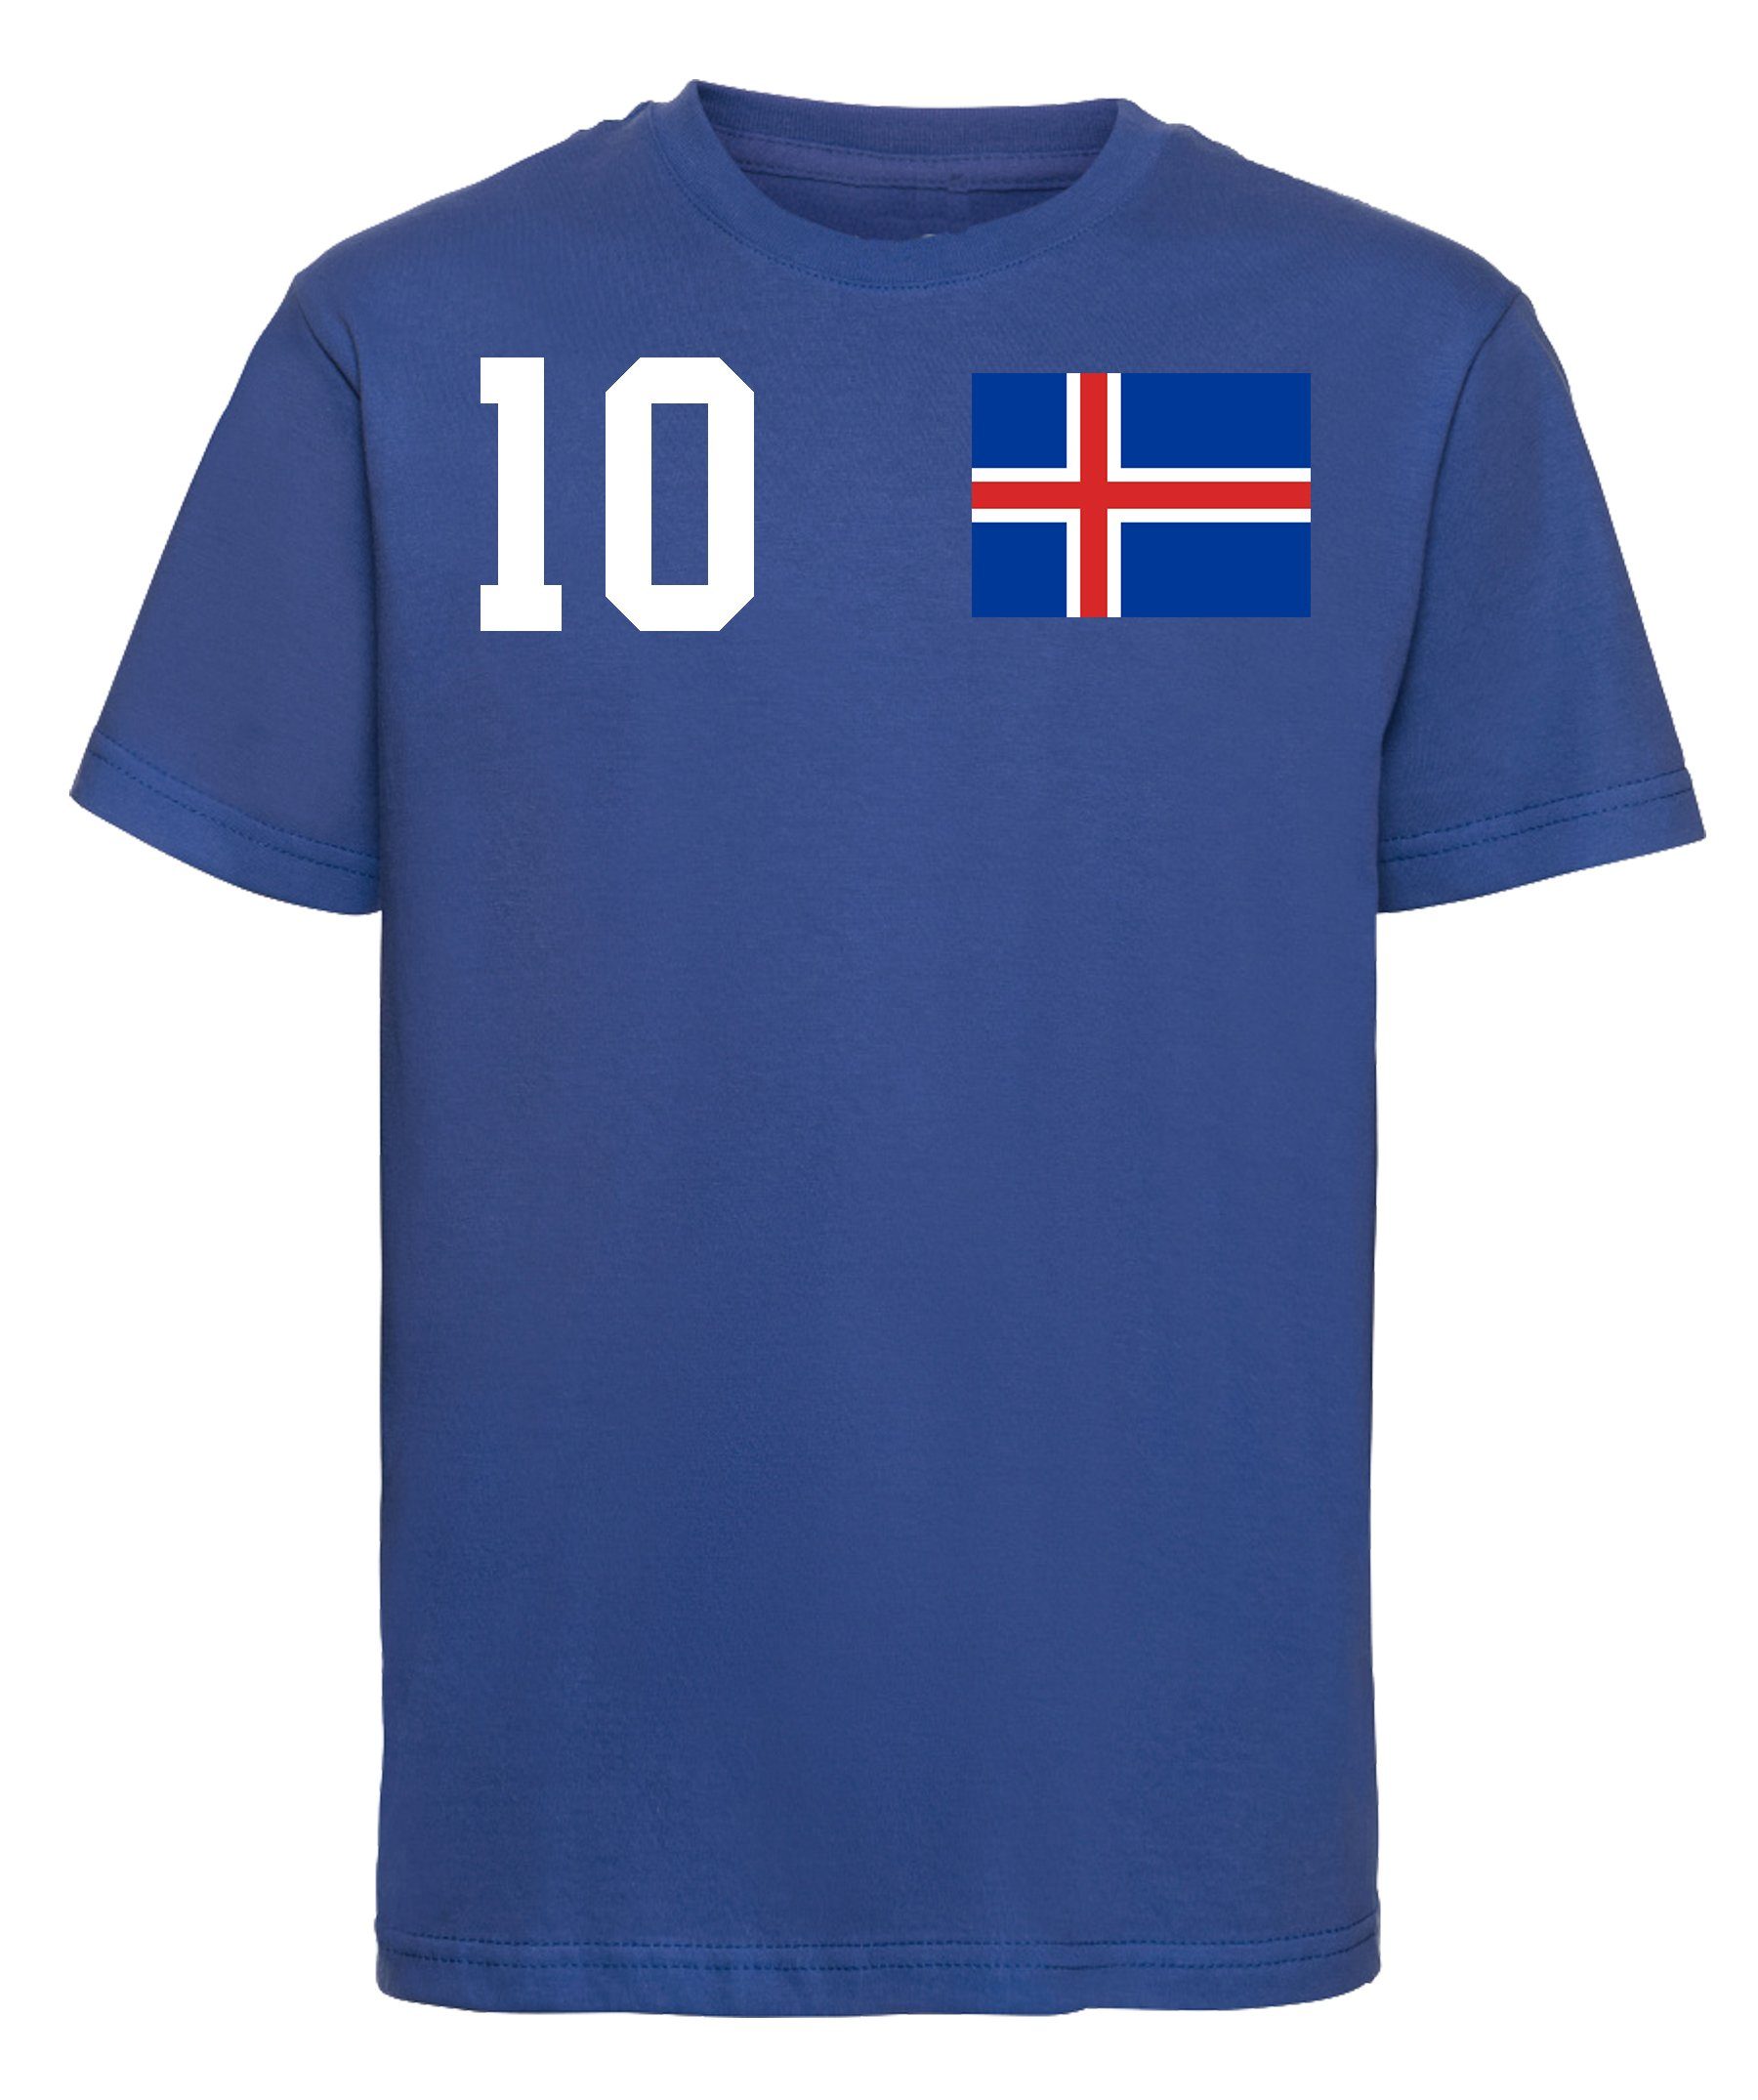 Youth Designz T-Shirt Island Kinder T-Shirt im Fußball Trikot Look mit trendigem Motiv